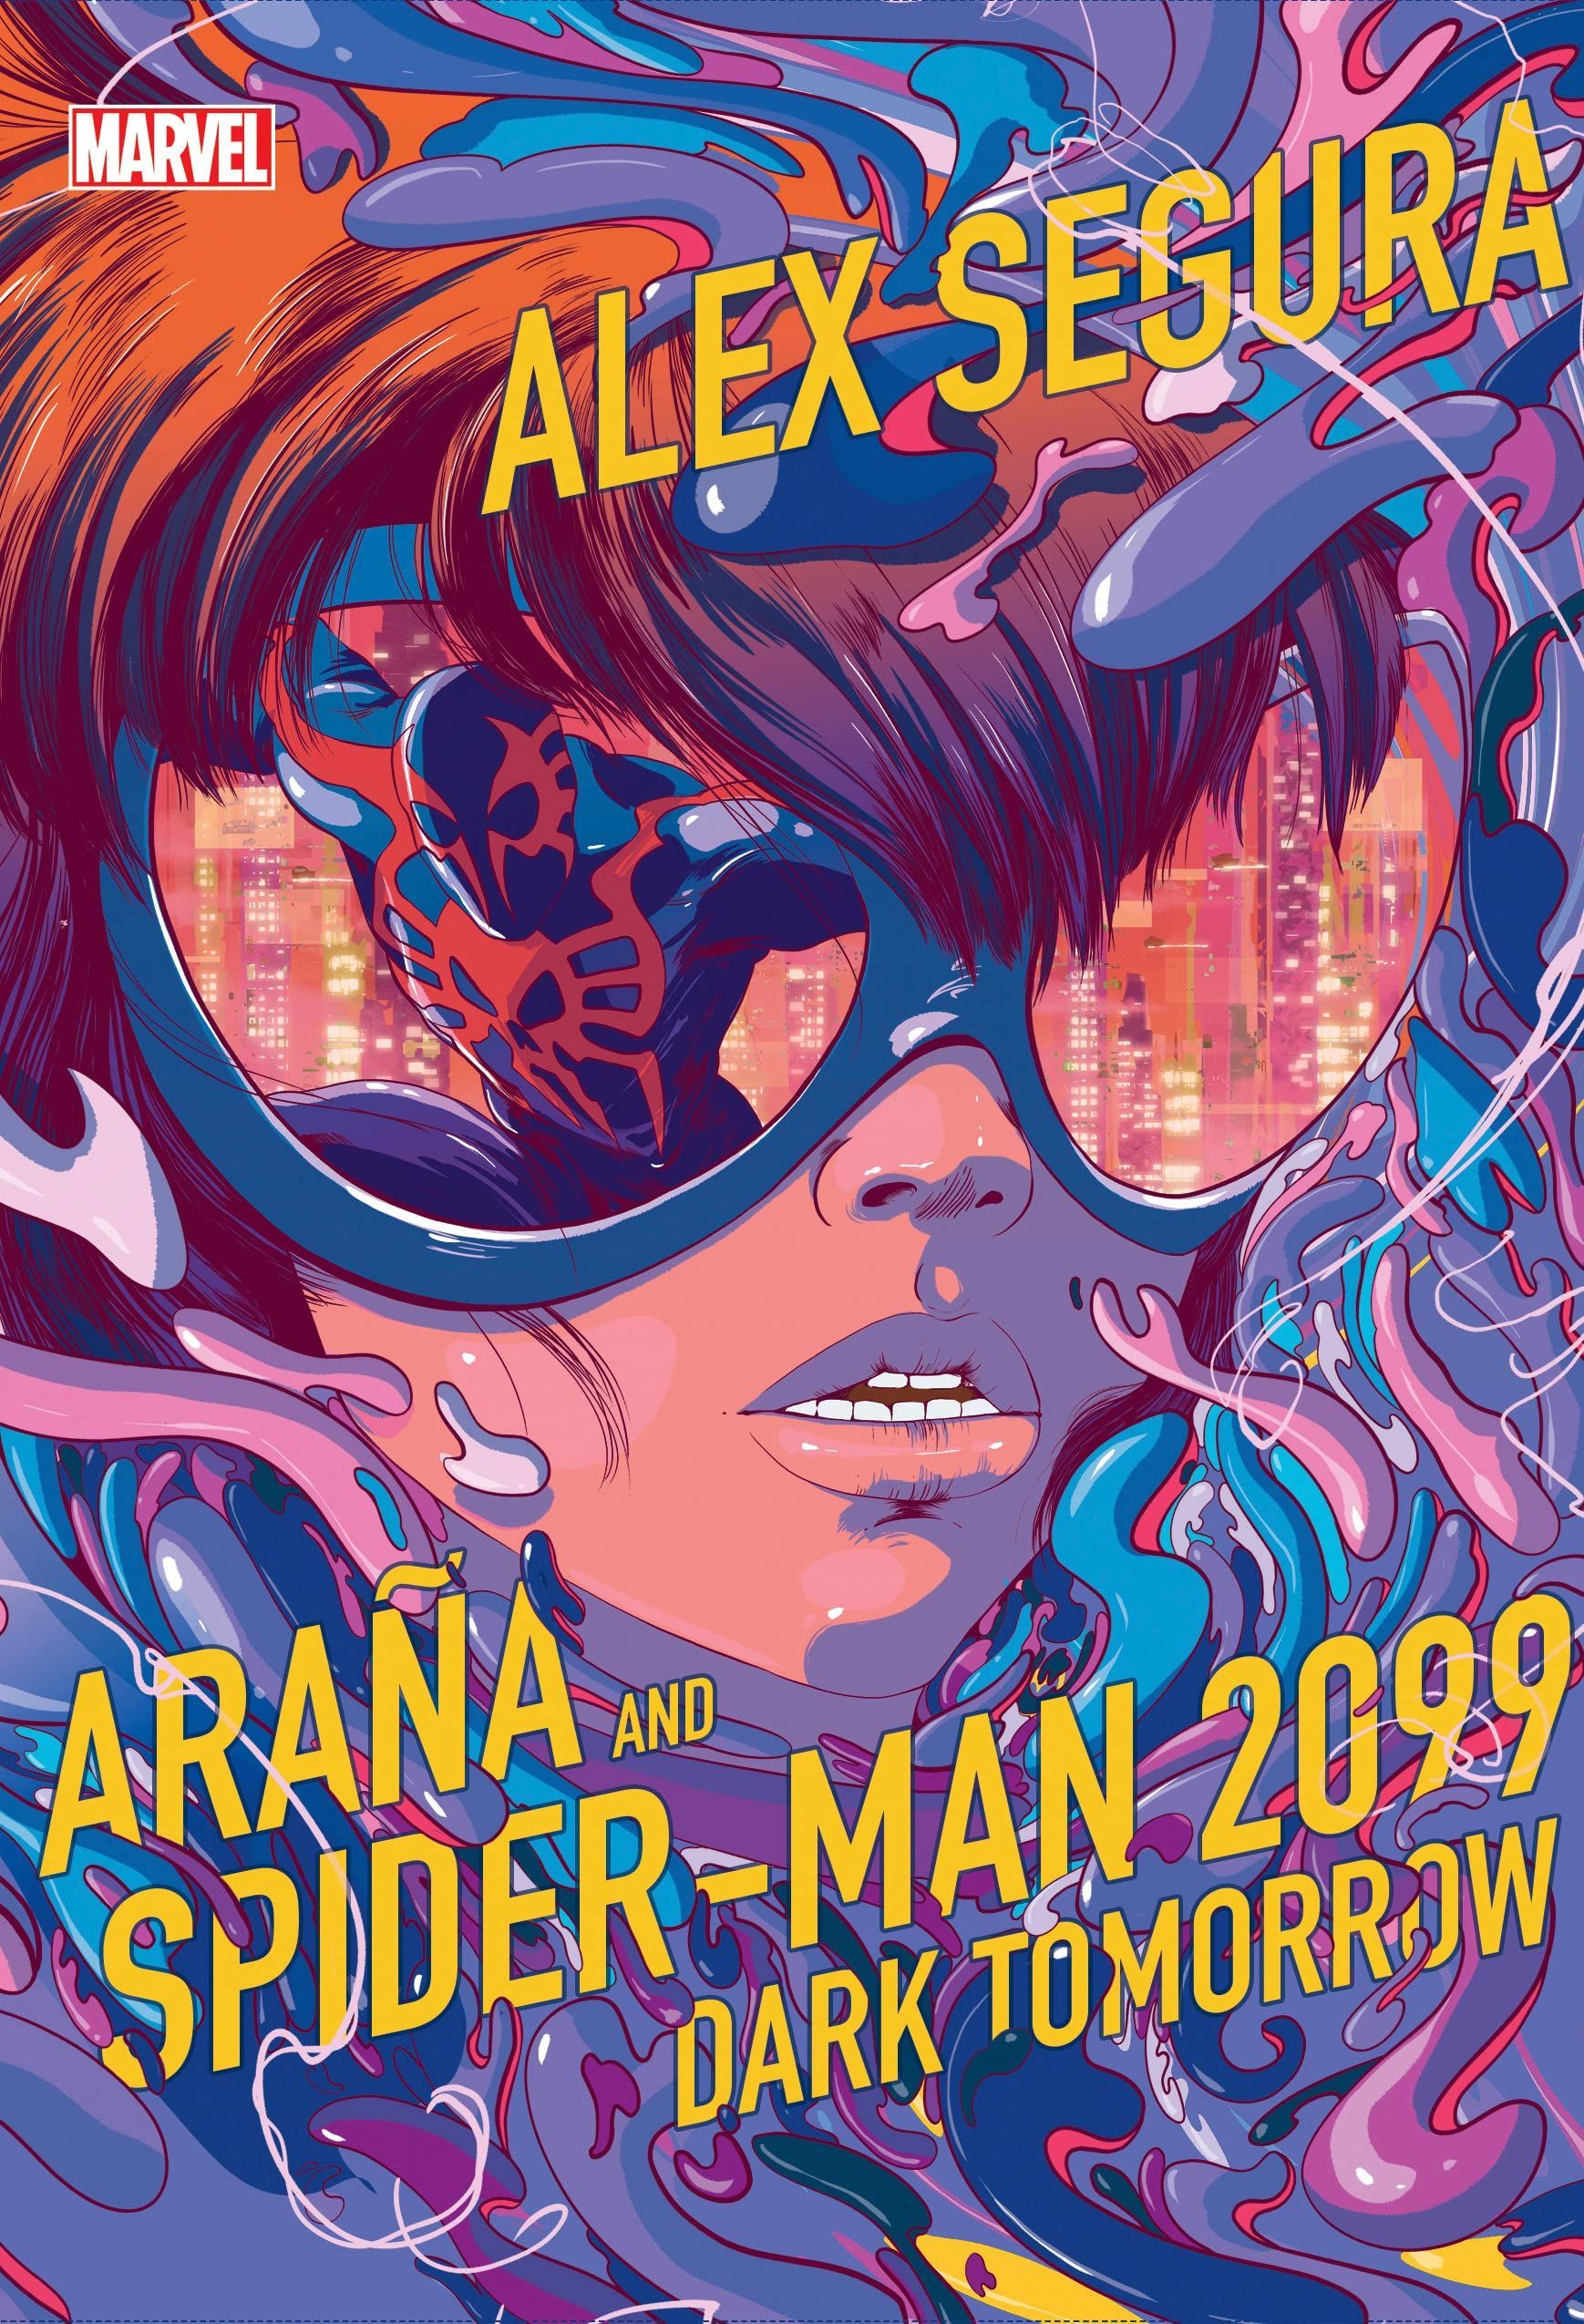 Five Questions for Alex Segura Regarding His YA Novel “Araña and Spider-Man 2099: Dark Tomorrow”